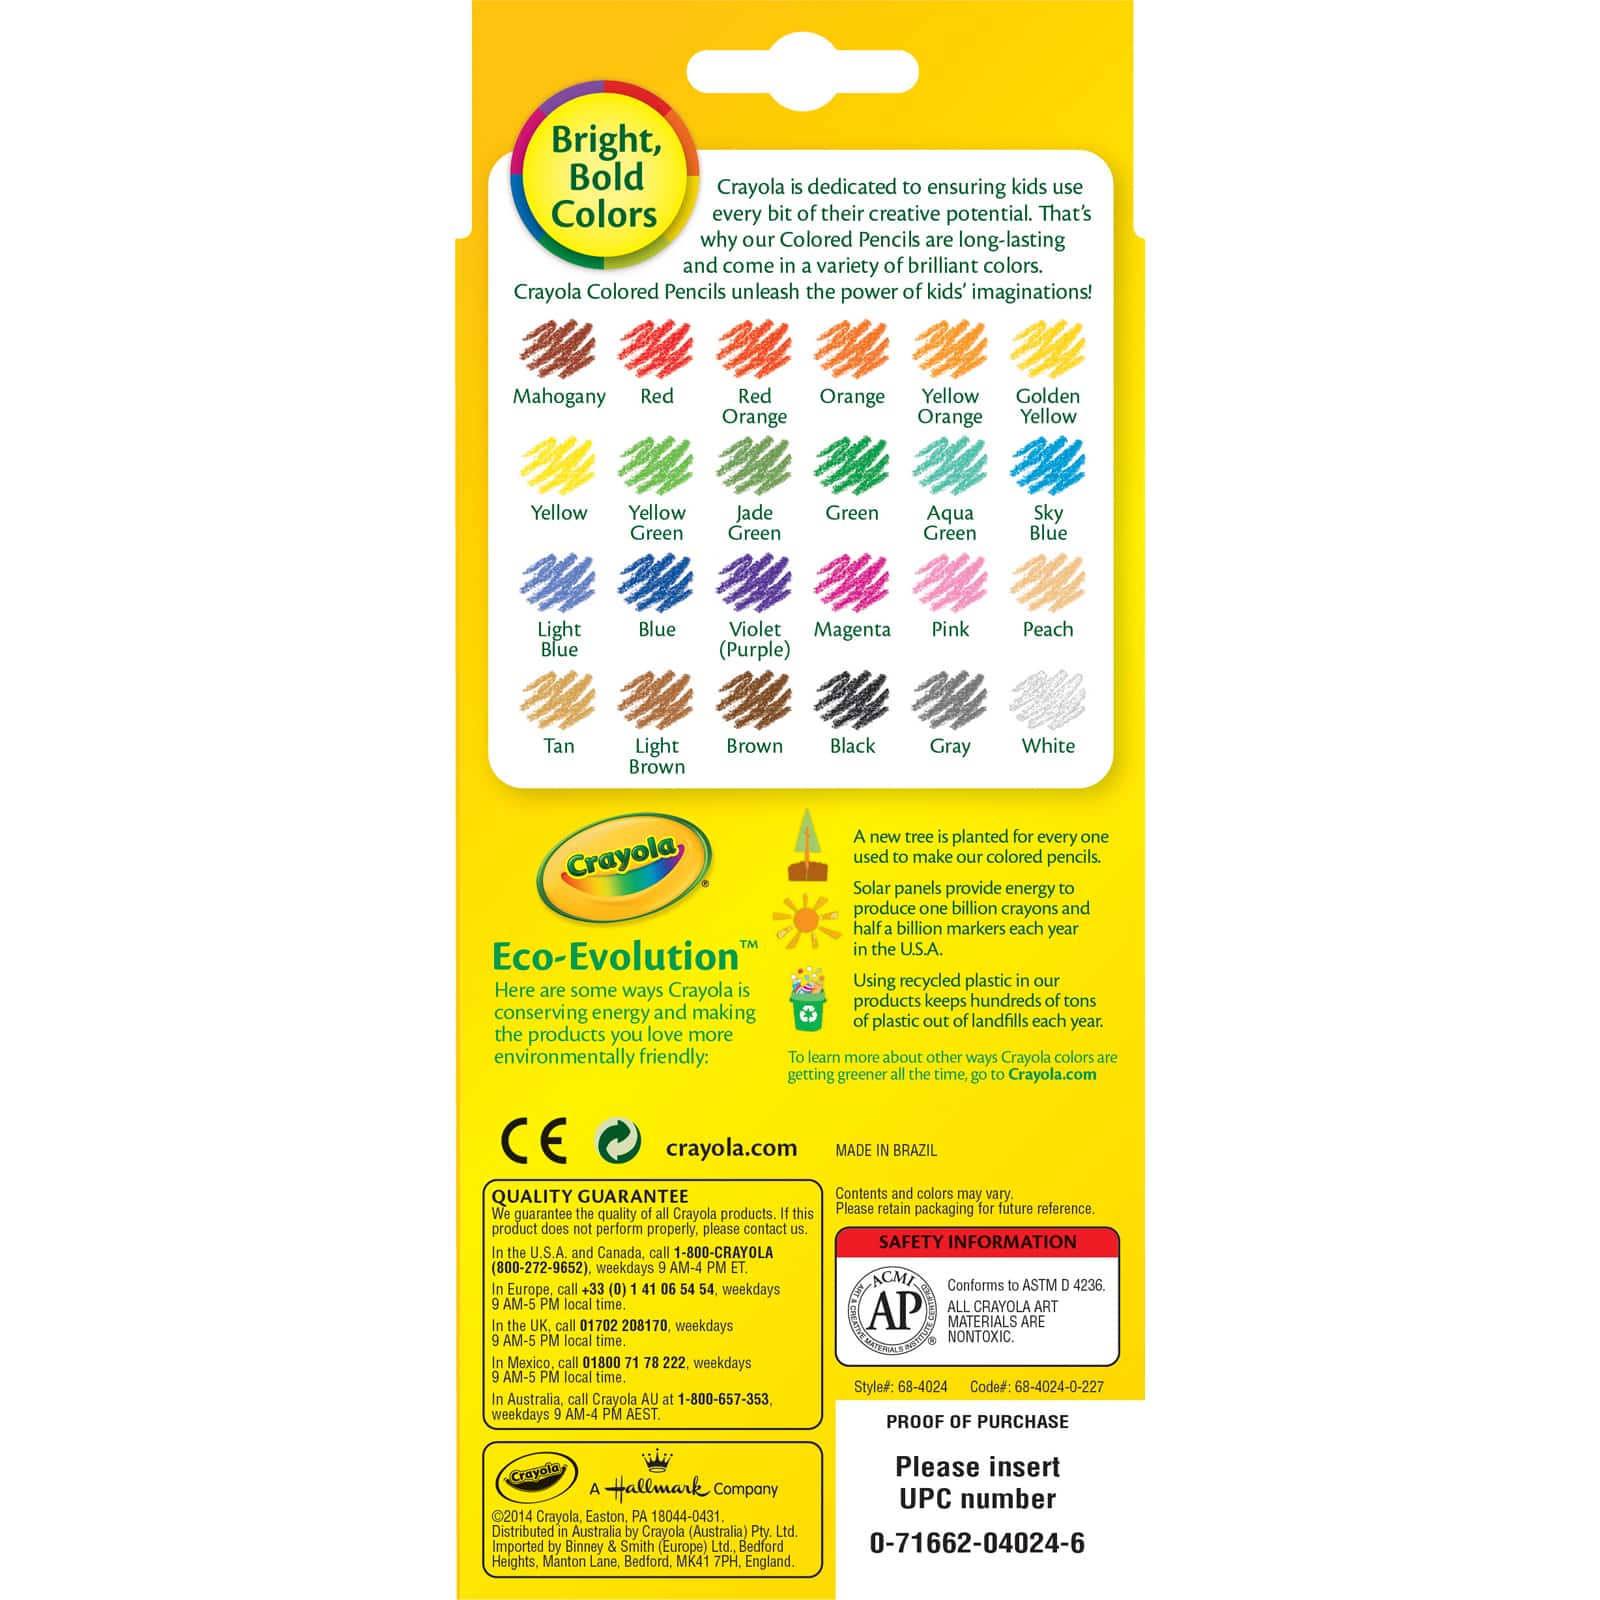 12 Packs: 24 ct. (288 total) Crayola&#xAE; Colored Pencils